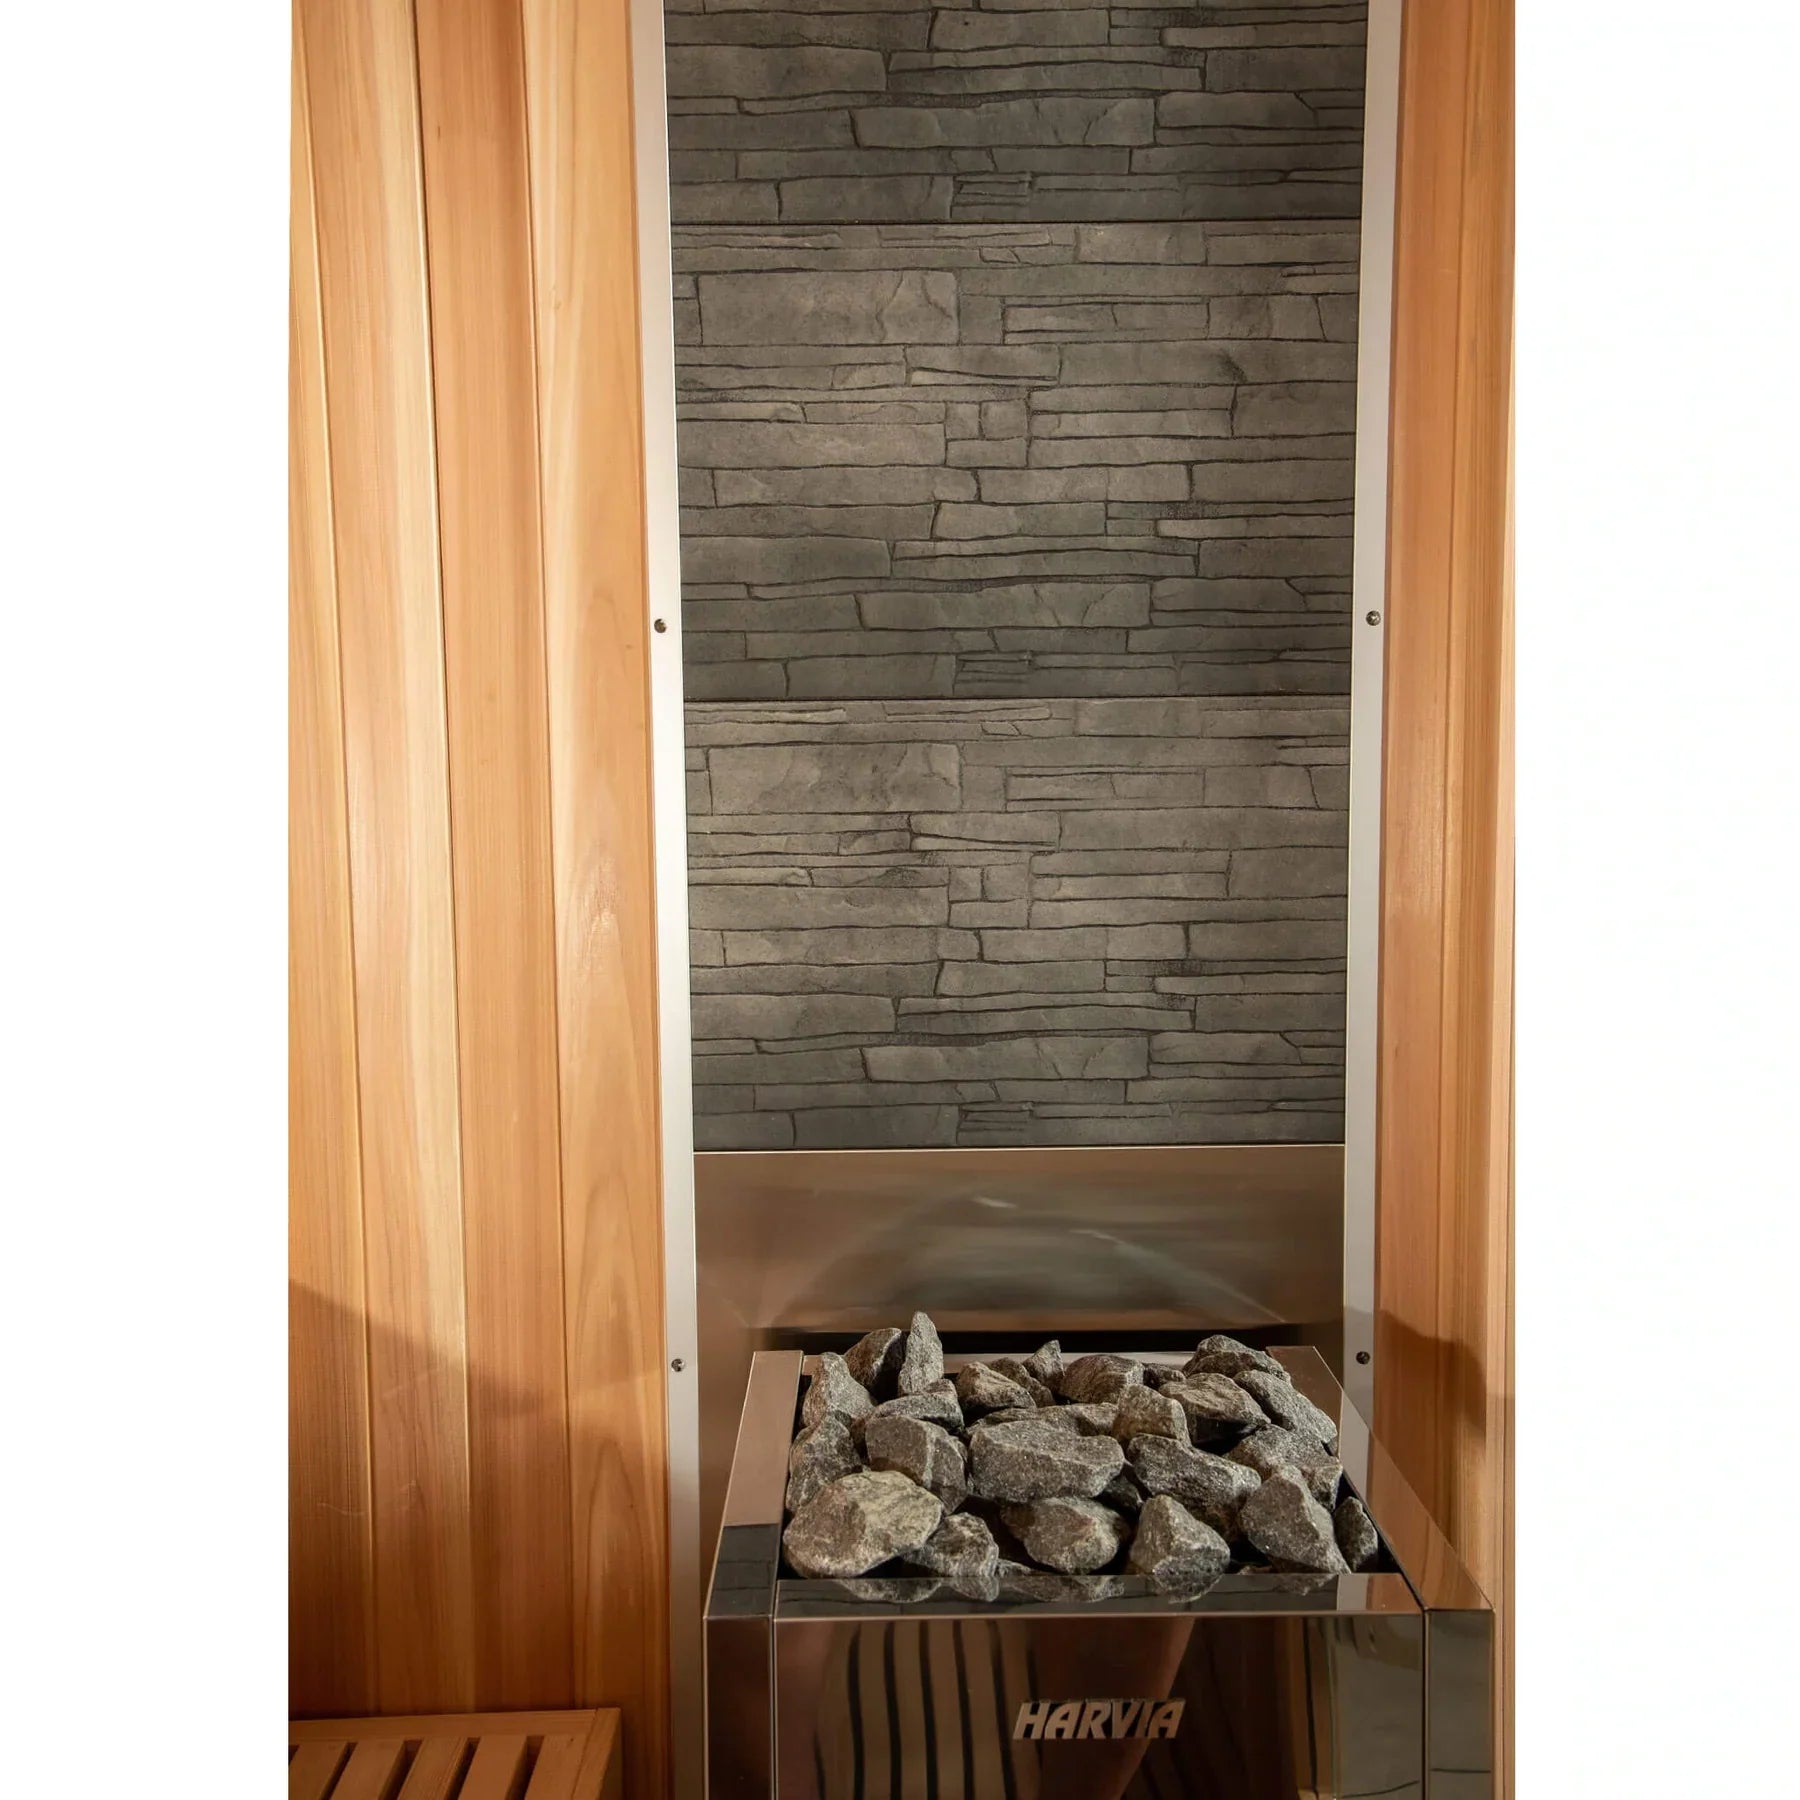 Almost Heaven Denali 6-Person Indoor Sauna